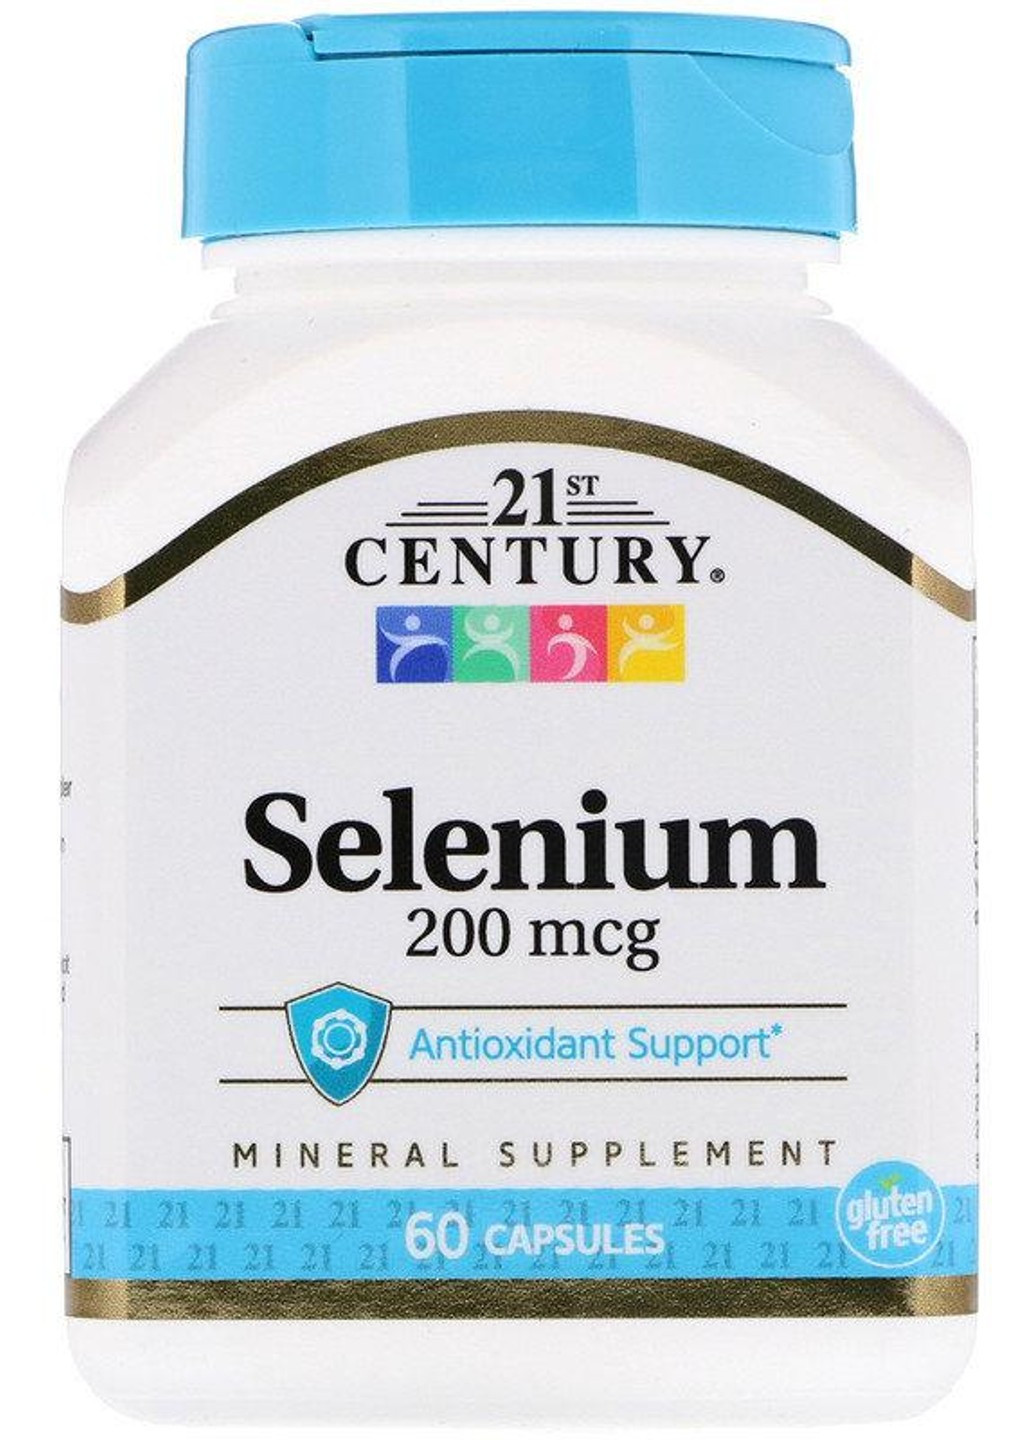 Селен Selenium 200 mcg (60 капс) 21 век центури селениум 21st Century (255409150)